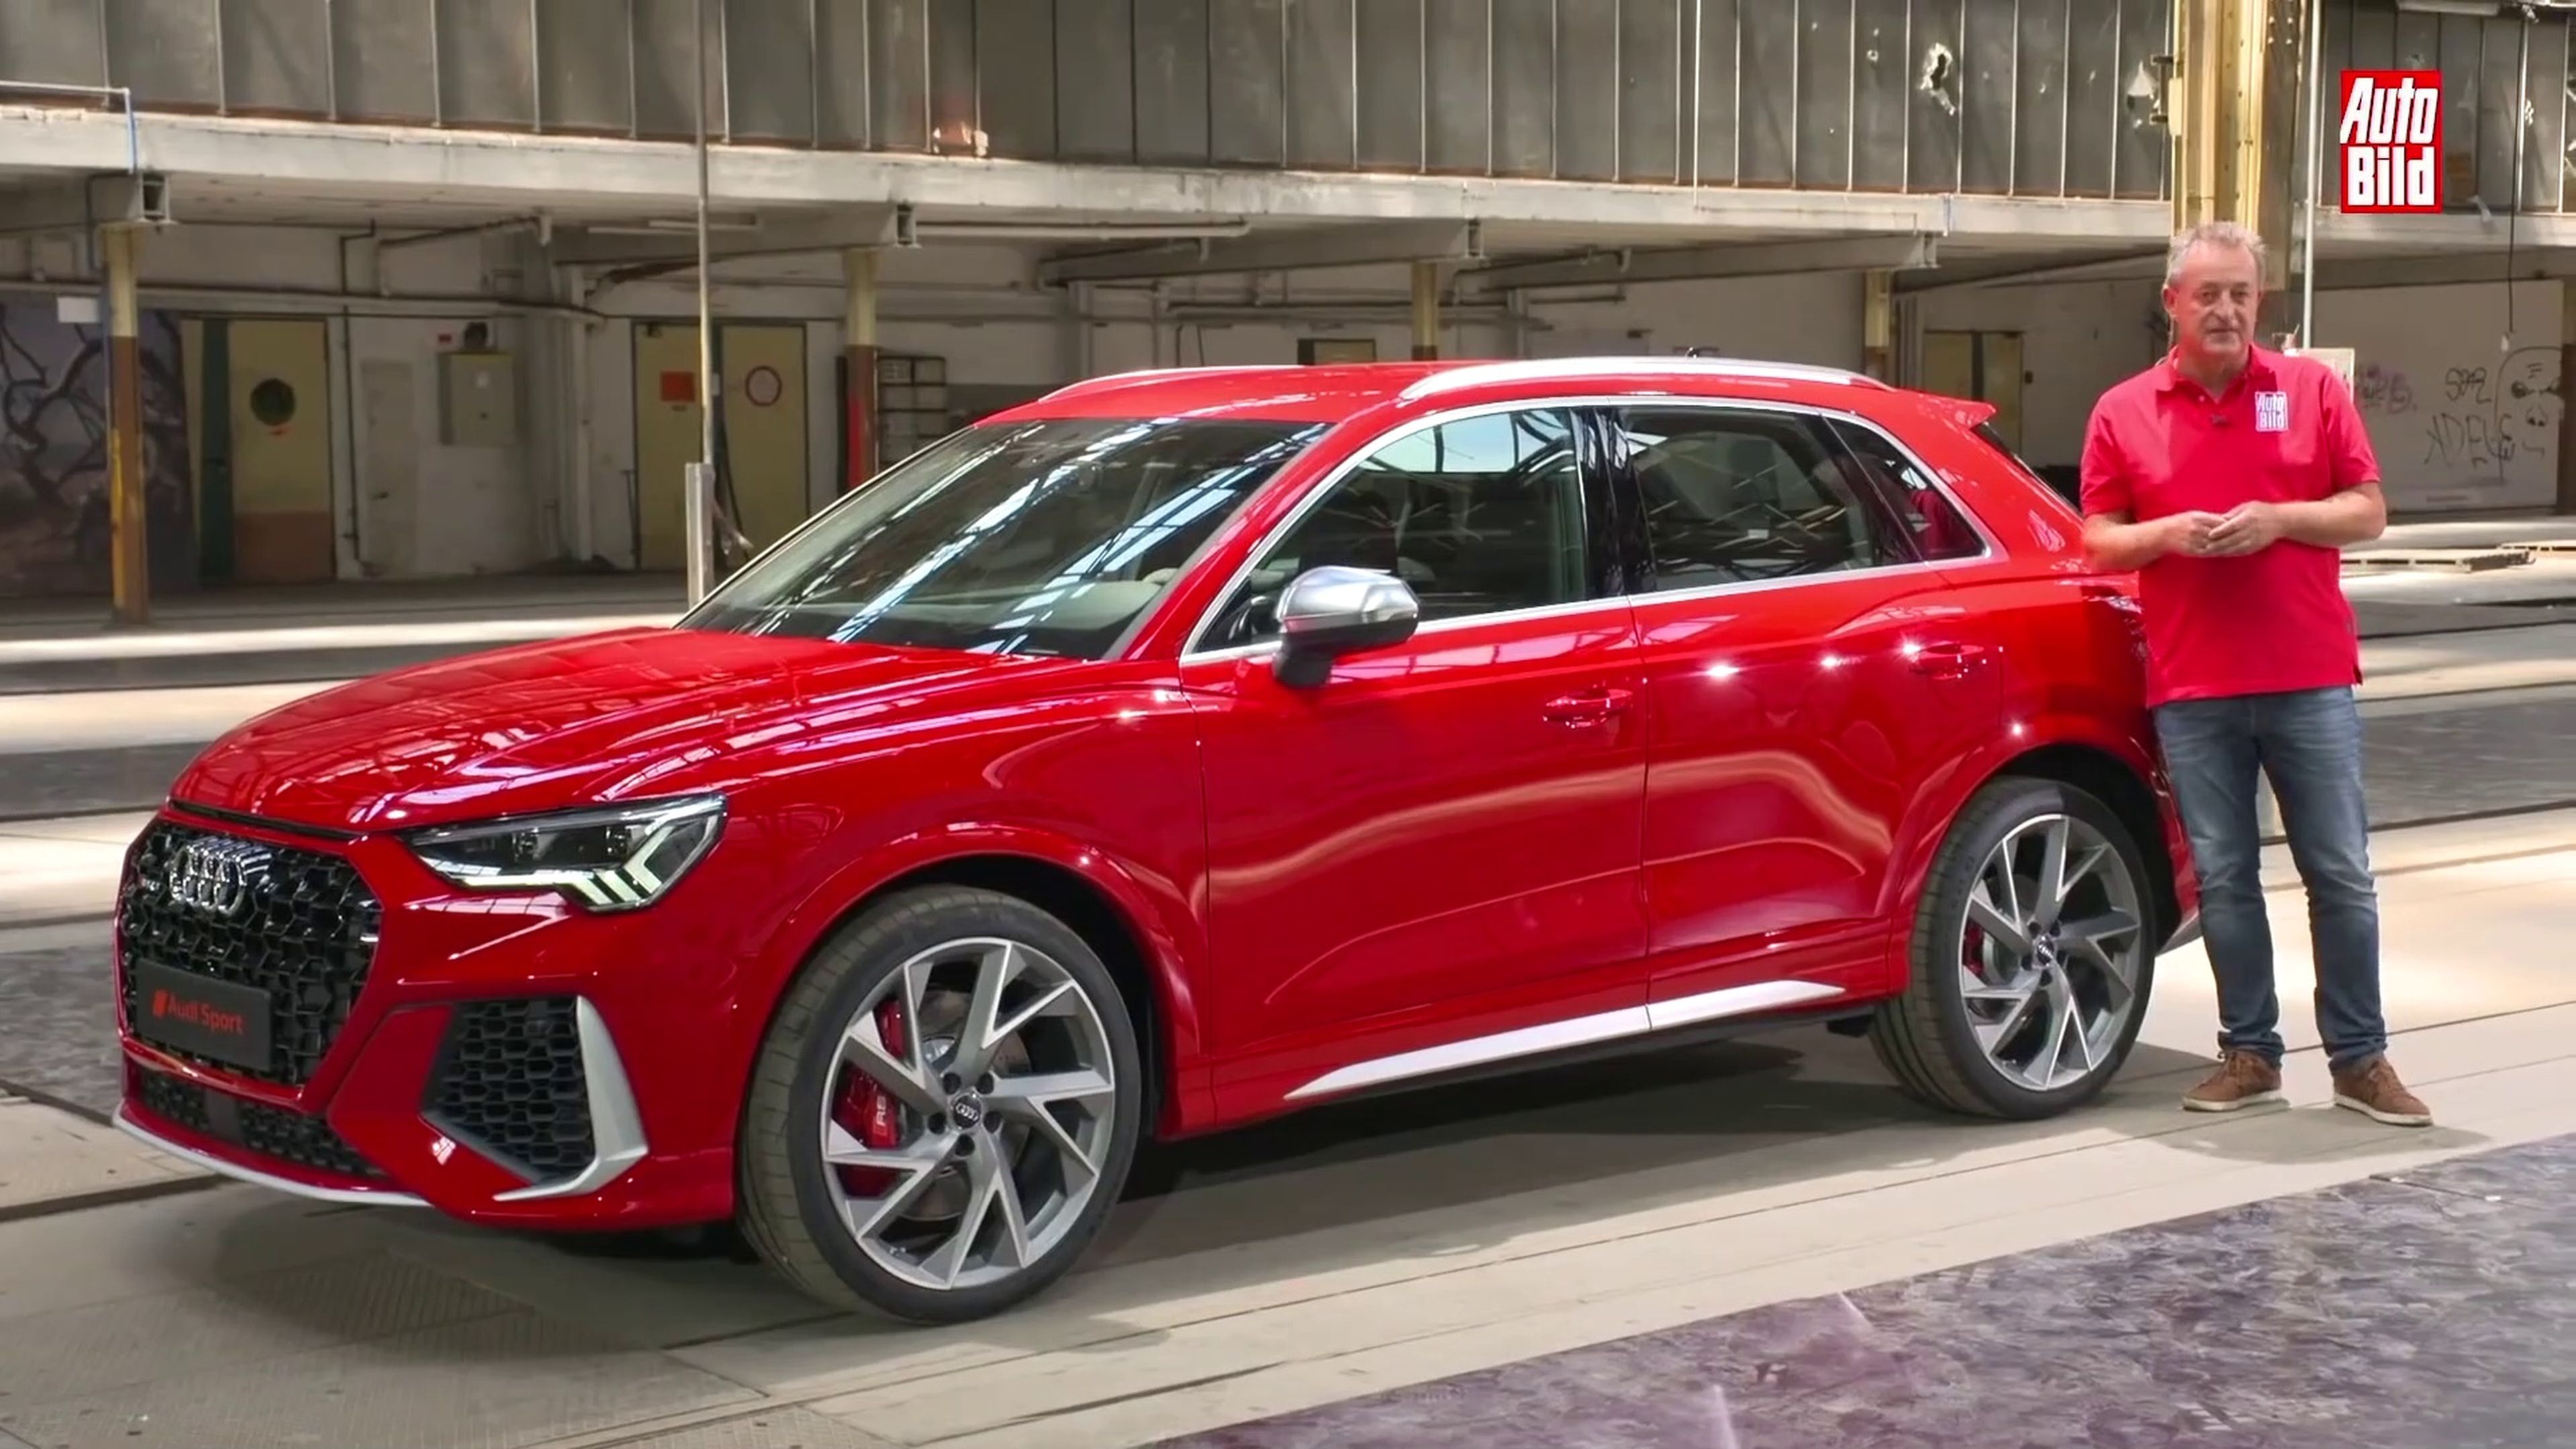 VÍDEO: Audi RSQ3 2020, así es el modelo final de serie